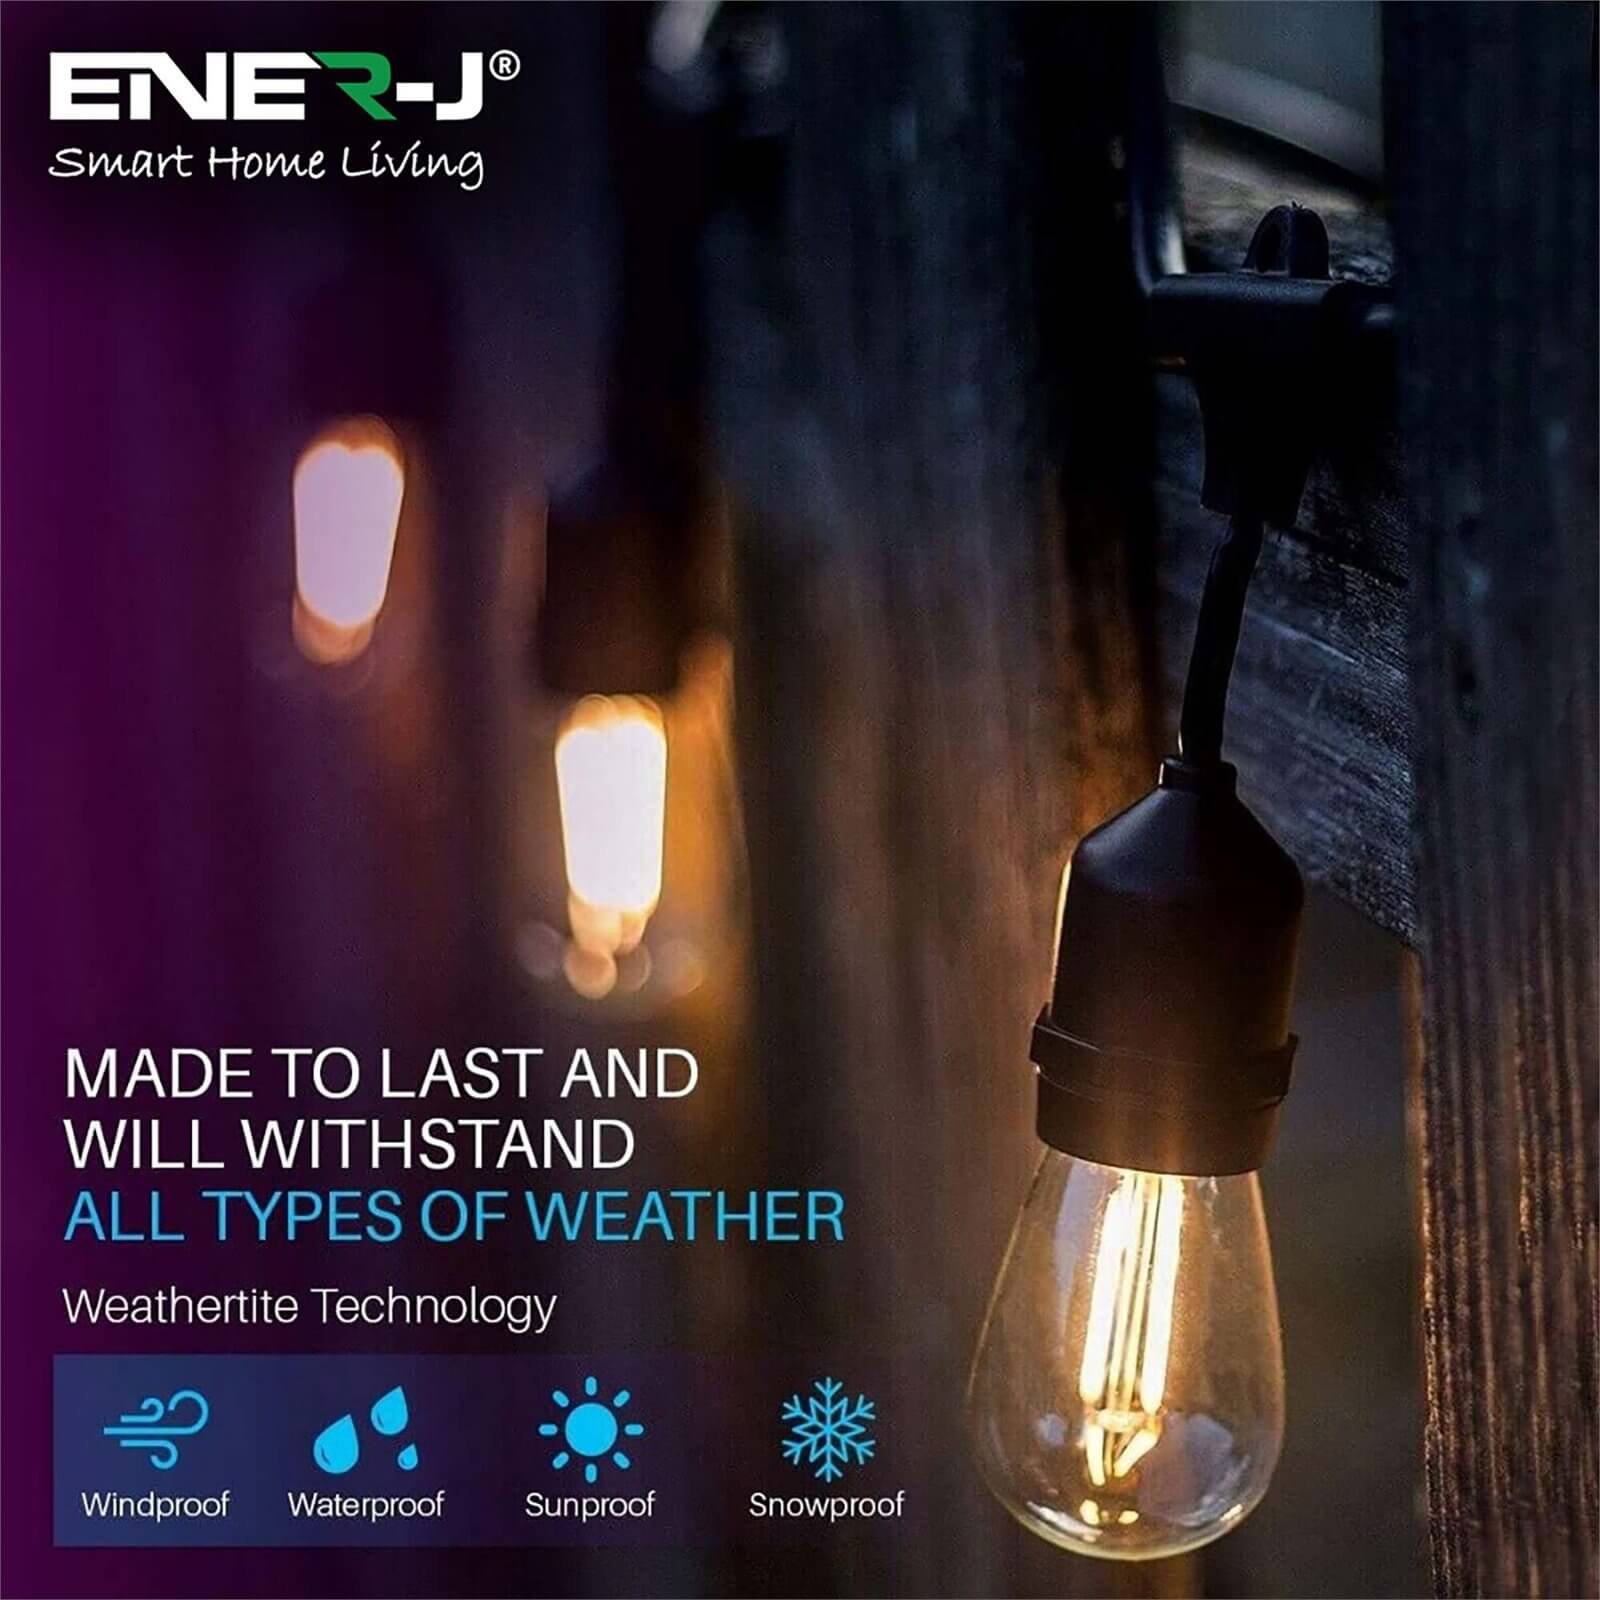 Ener-J LED Filament String Kit